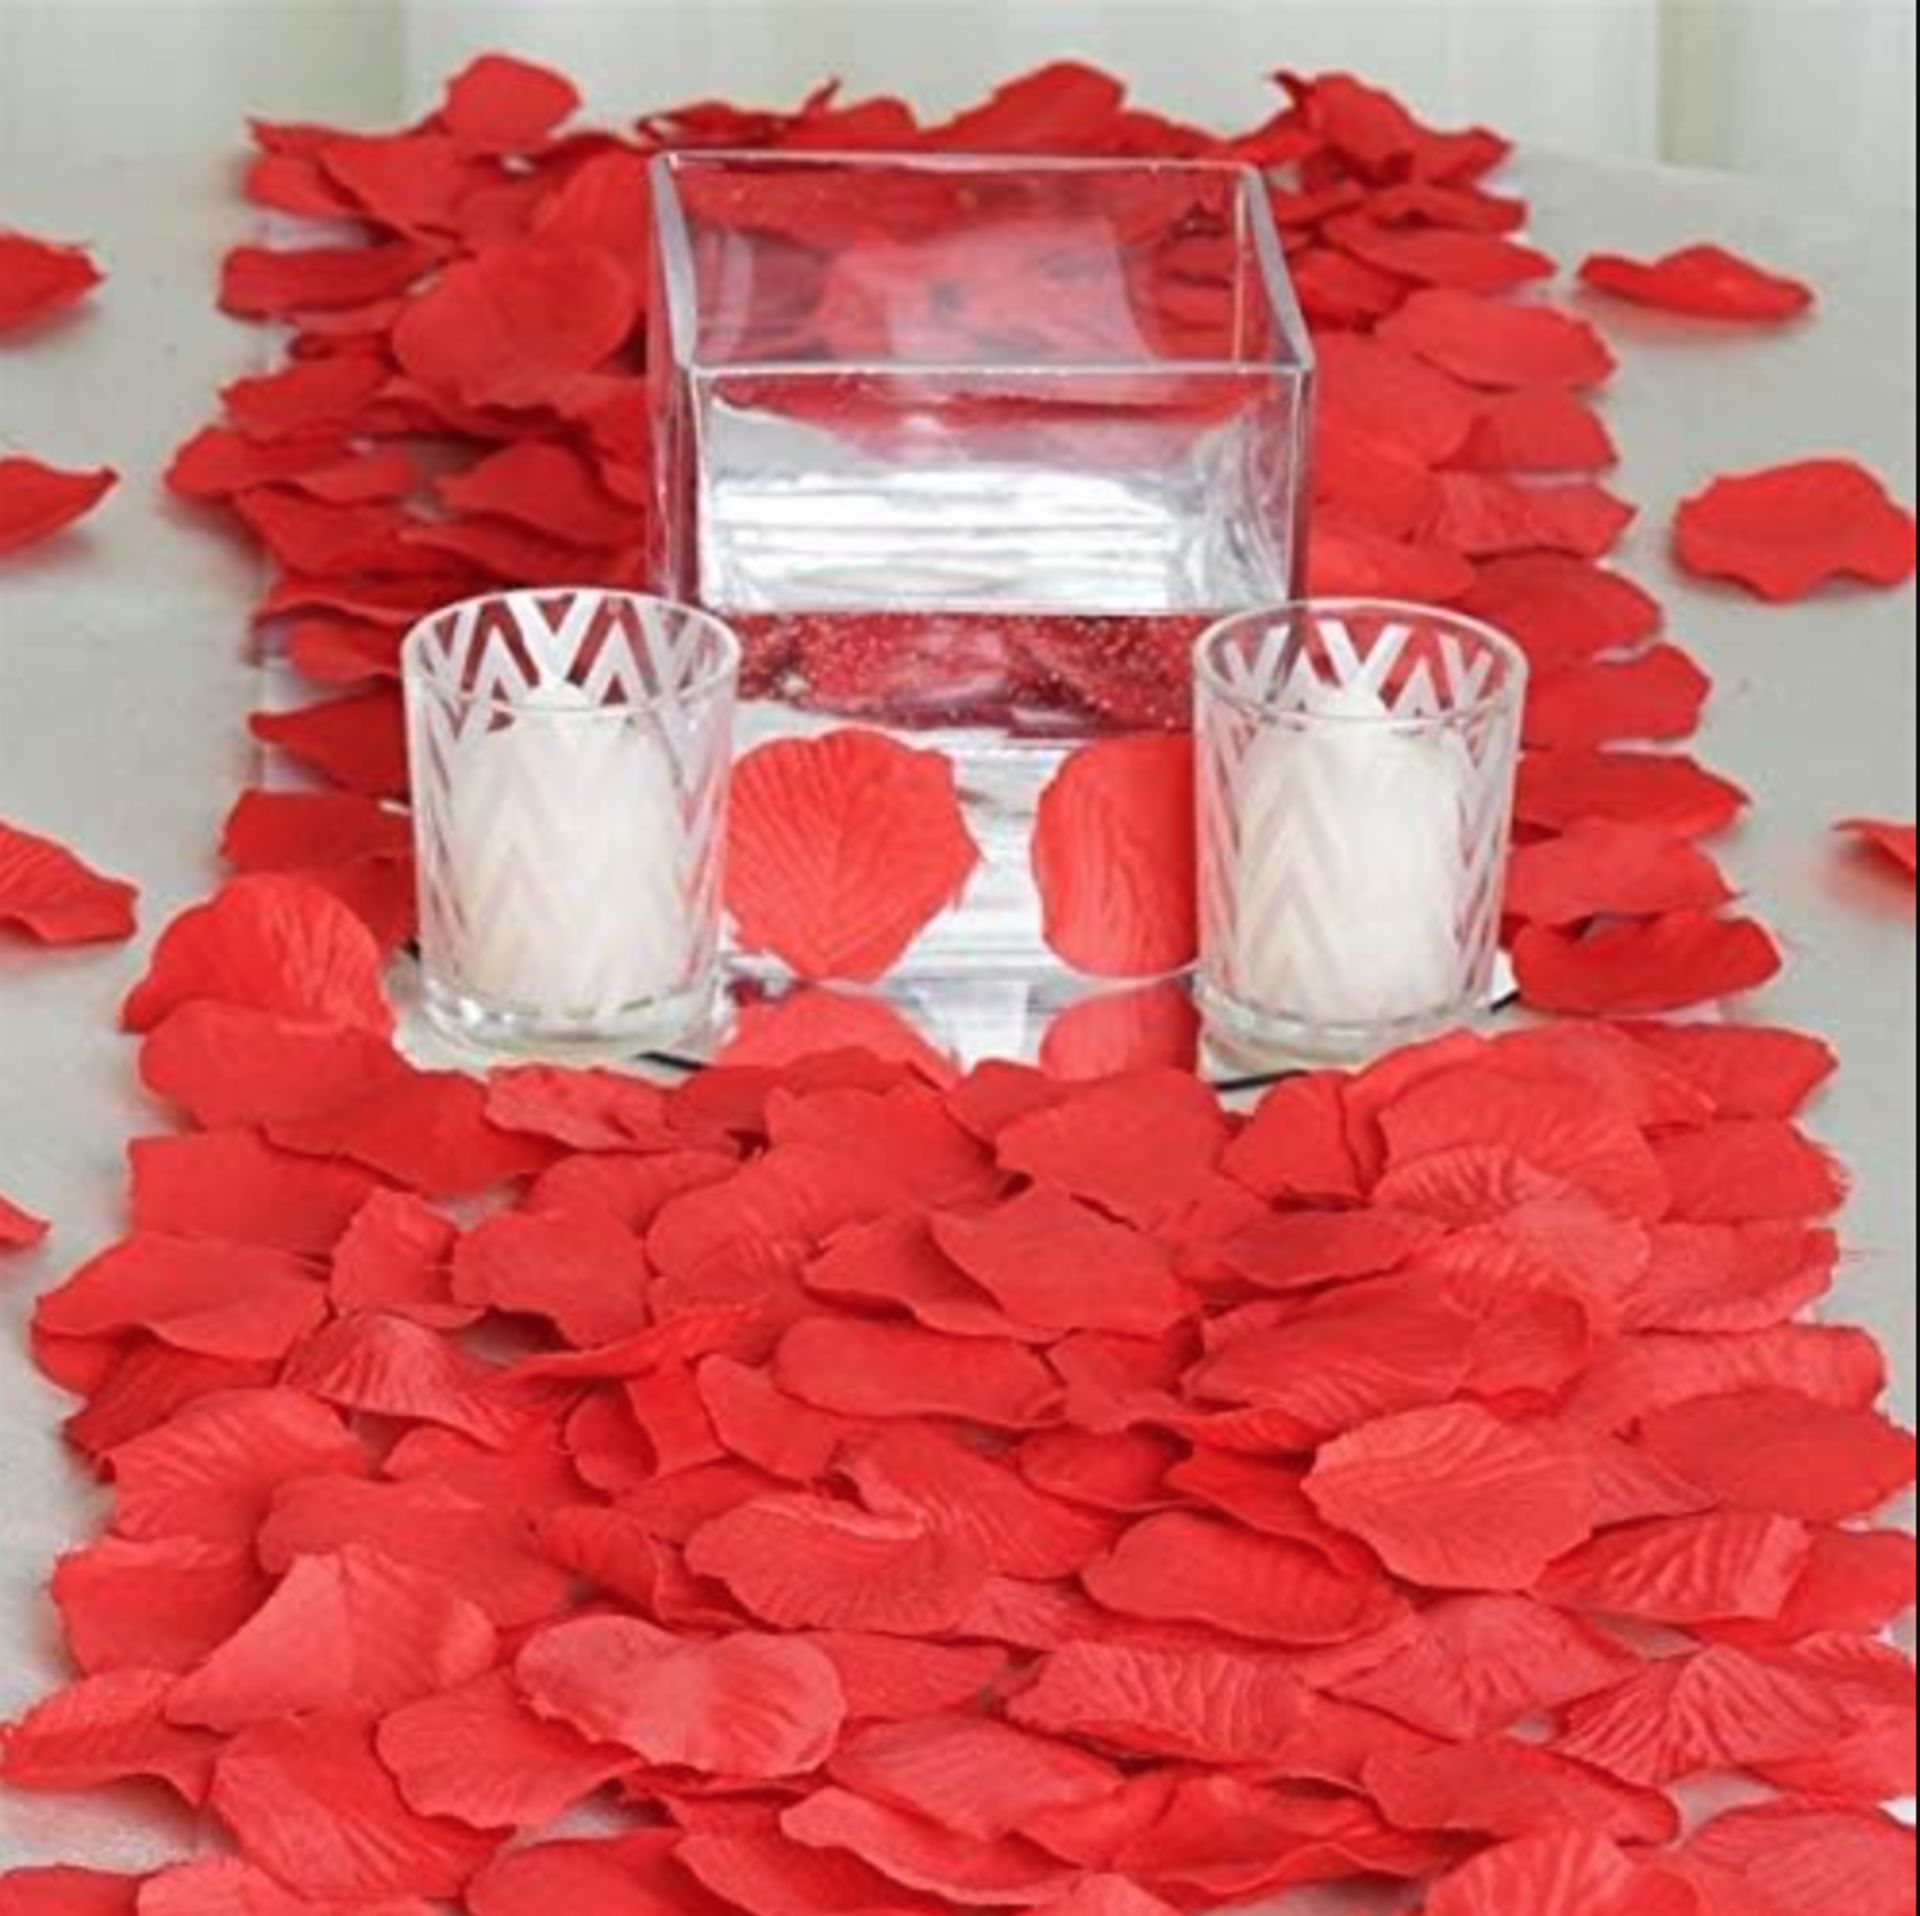 100pcs Deep Red Silk Rose Petals Valentines Day Wedding Confetti RRP£3